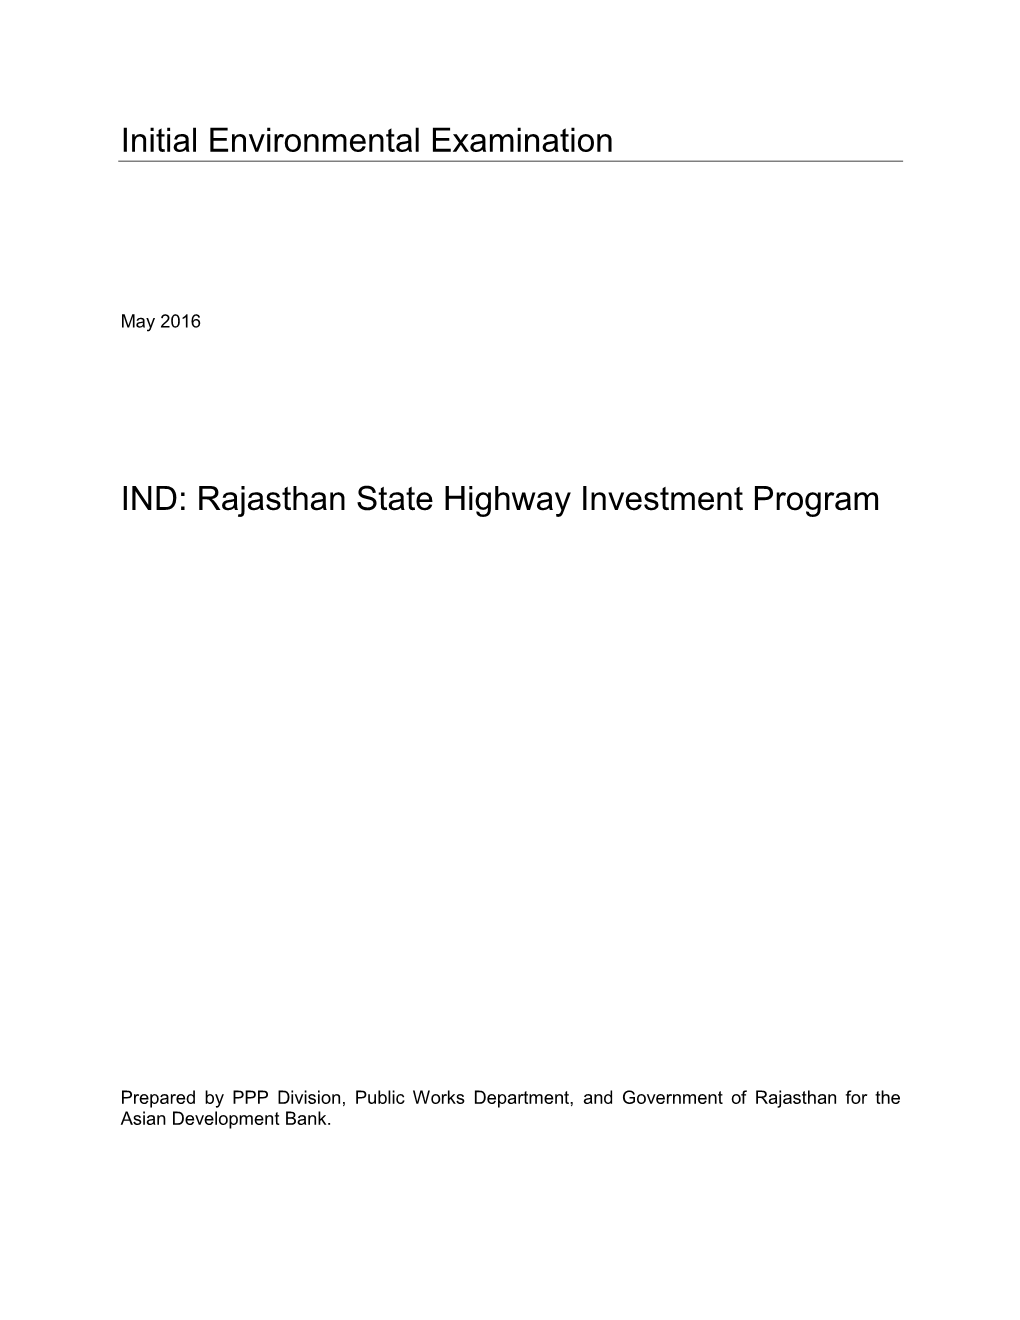 Rajasthan State Highway Investment Program